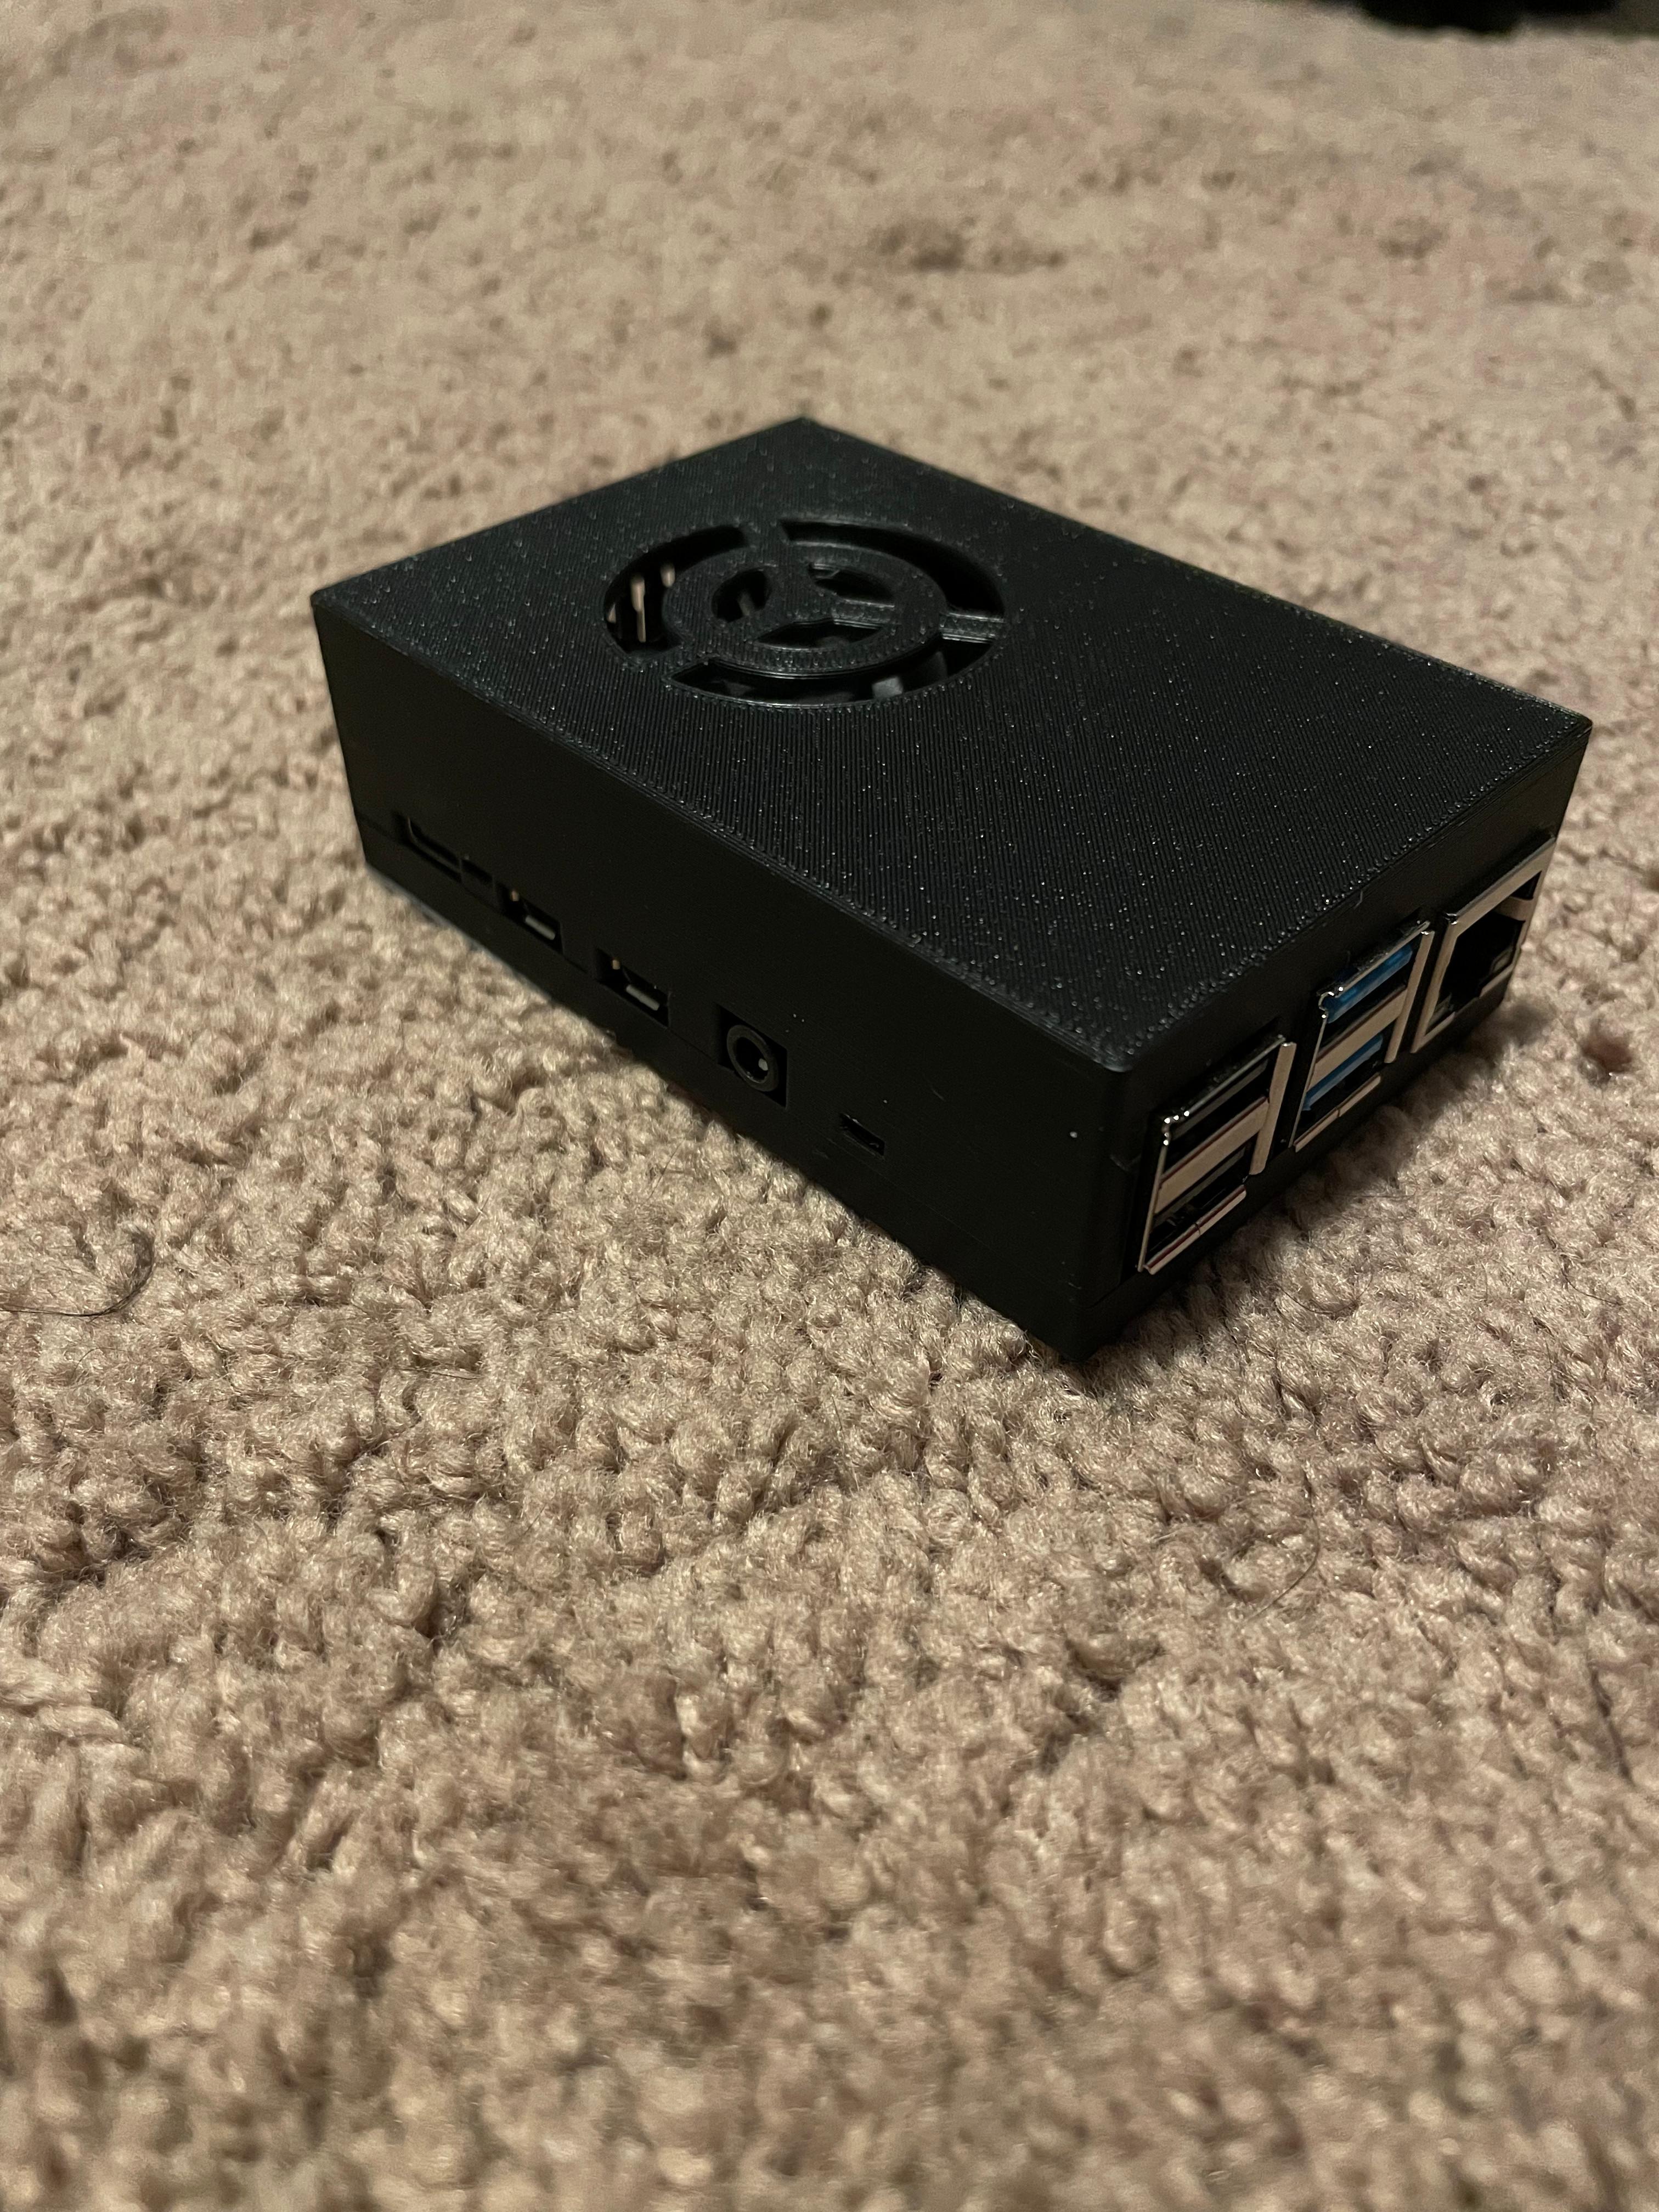  Raspberry Pi 4B case 3d model